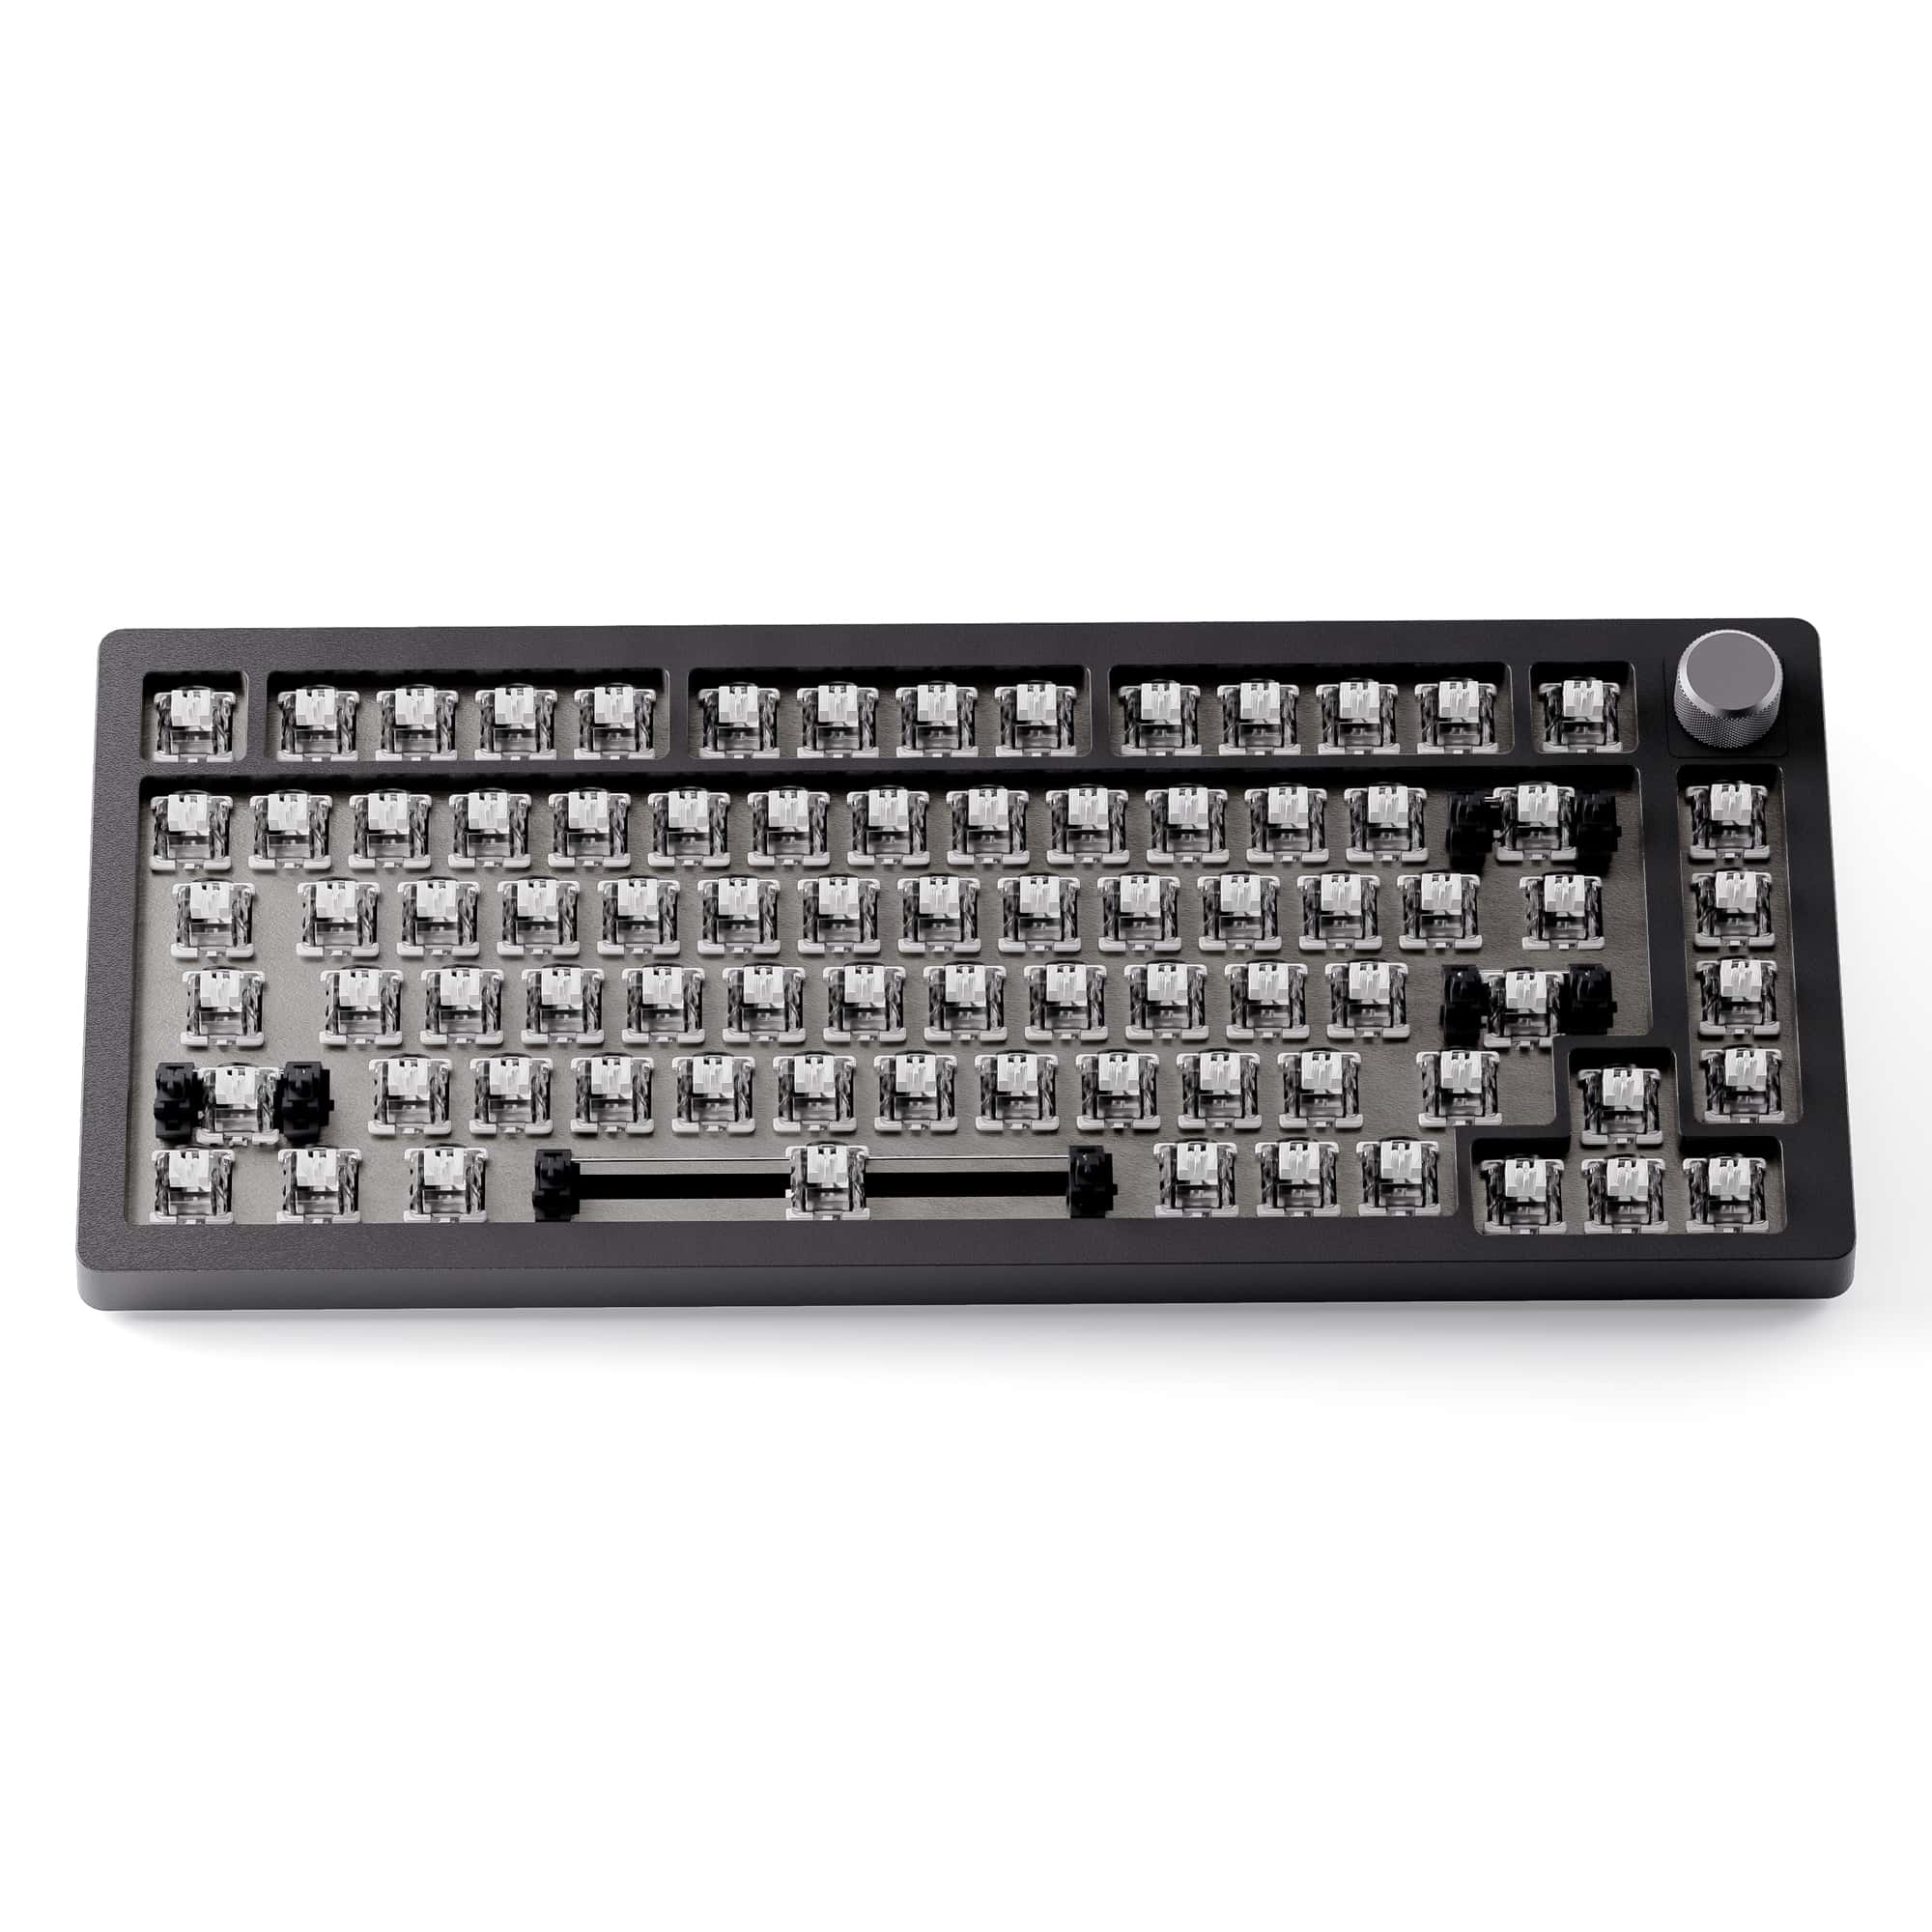 DrunkDeer A75 - Rapid Trigger Keyboard Magnetic Switch Keyboard